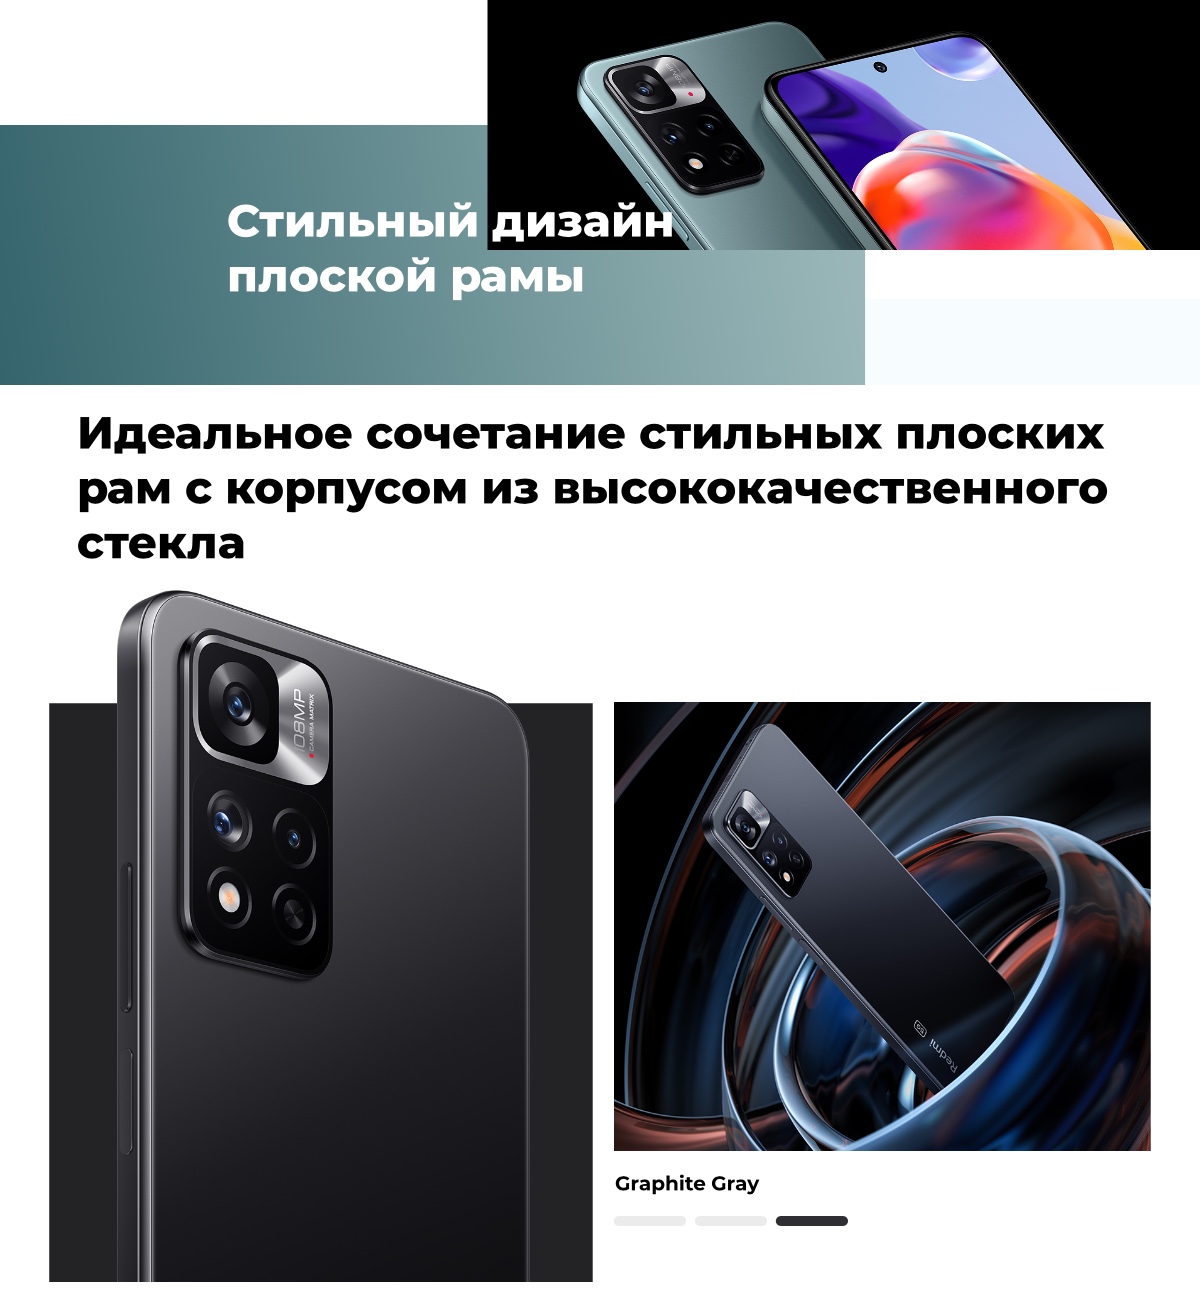 Смартфон Redmi Note 11 Pro Plus 5G 8/256Gb Graphite Grey Global